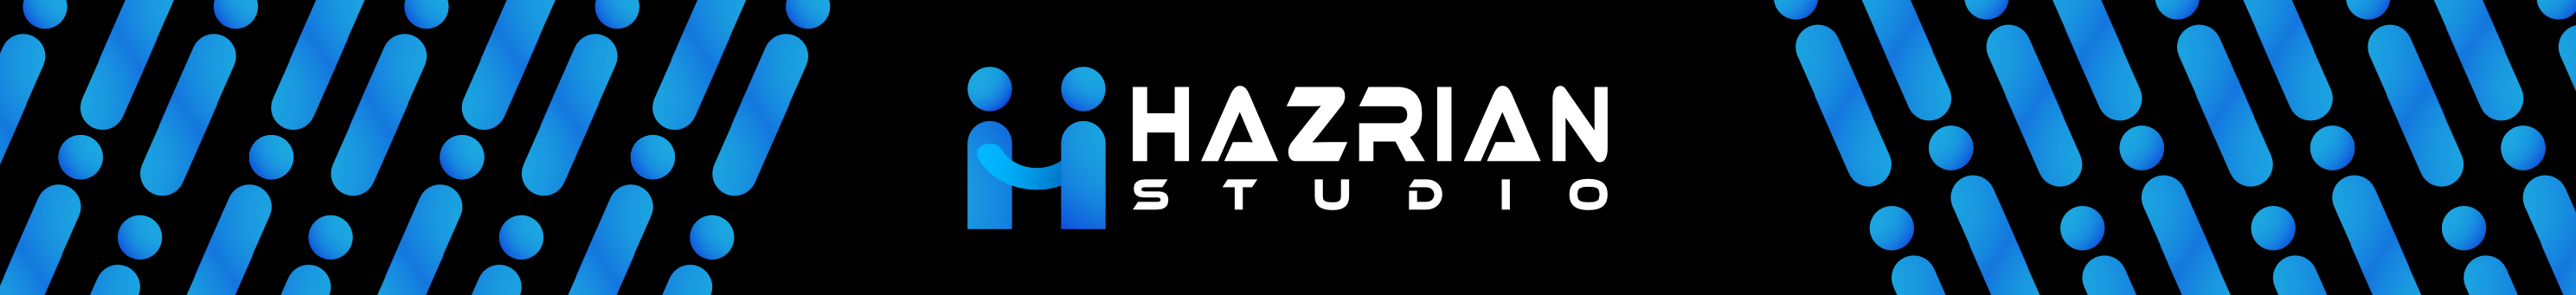 Hazrian Studio のプロファイルバナー